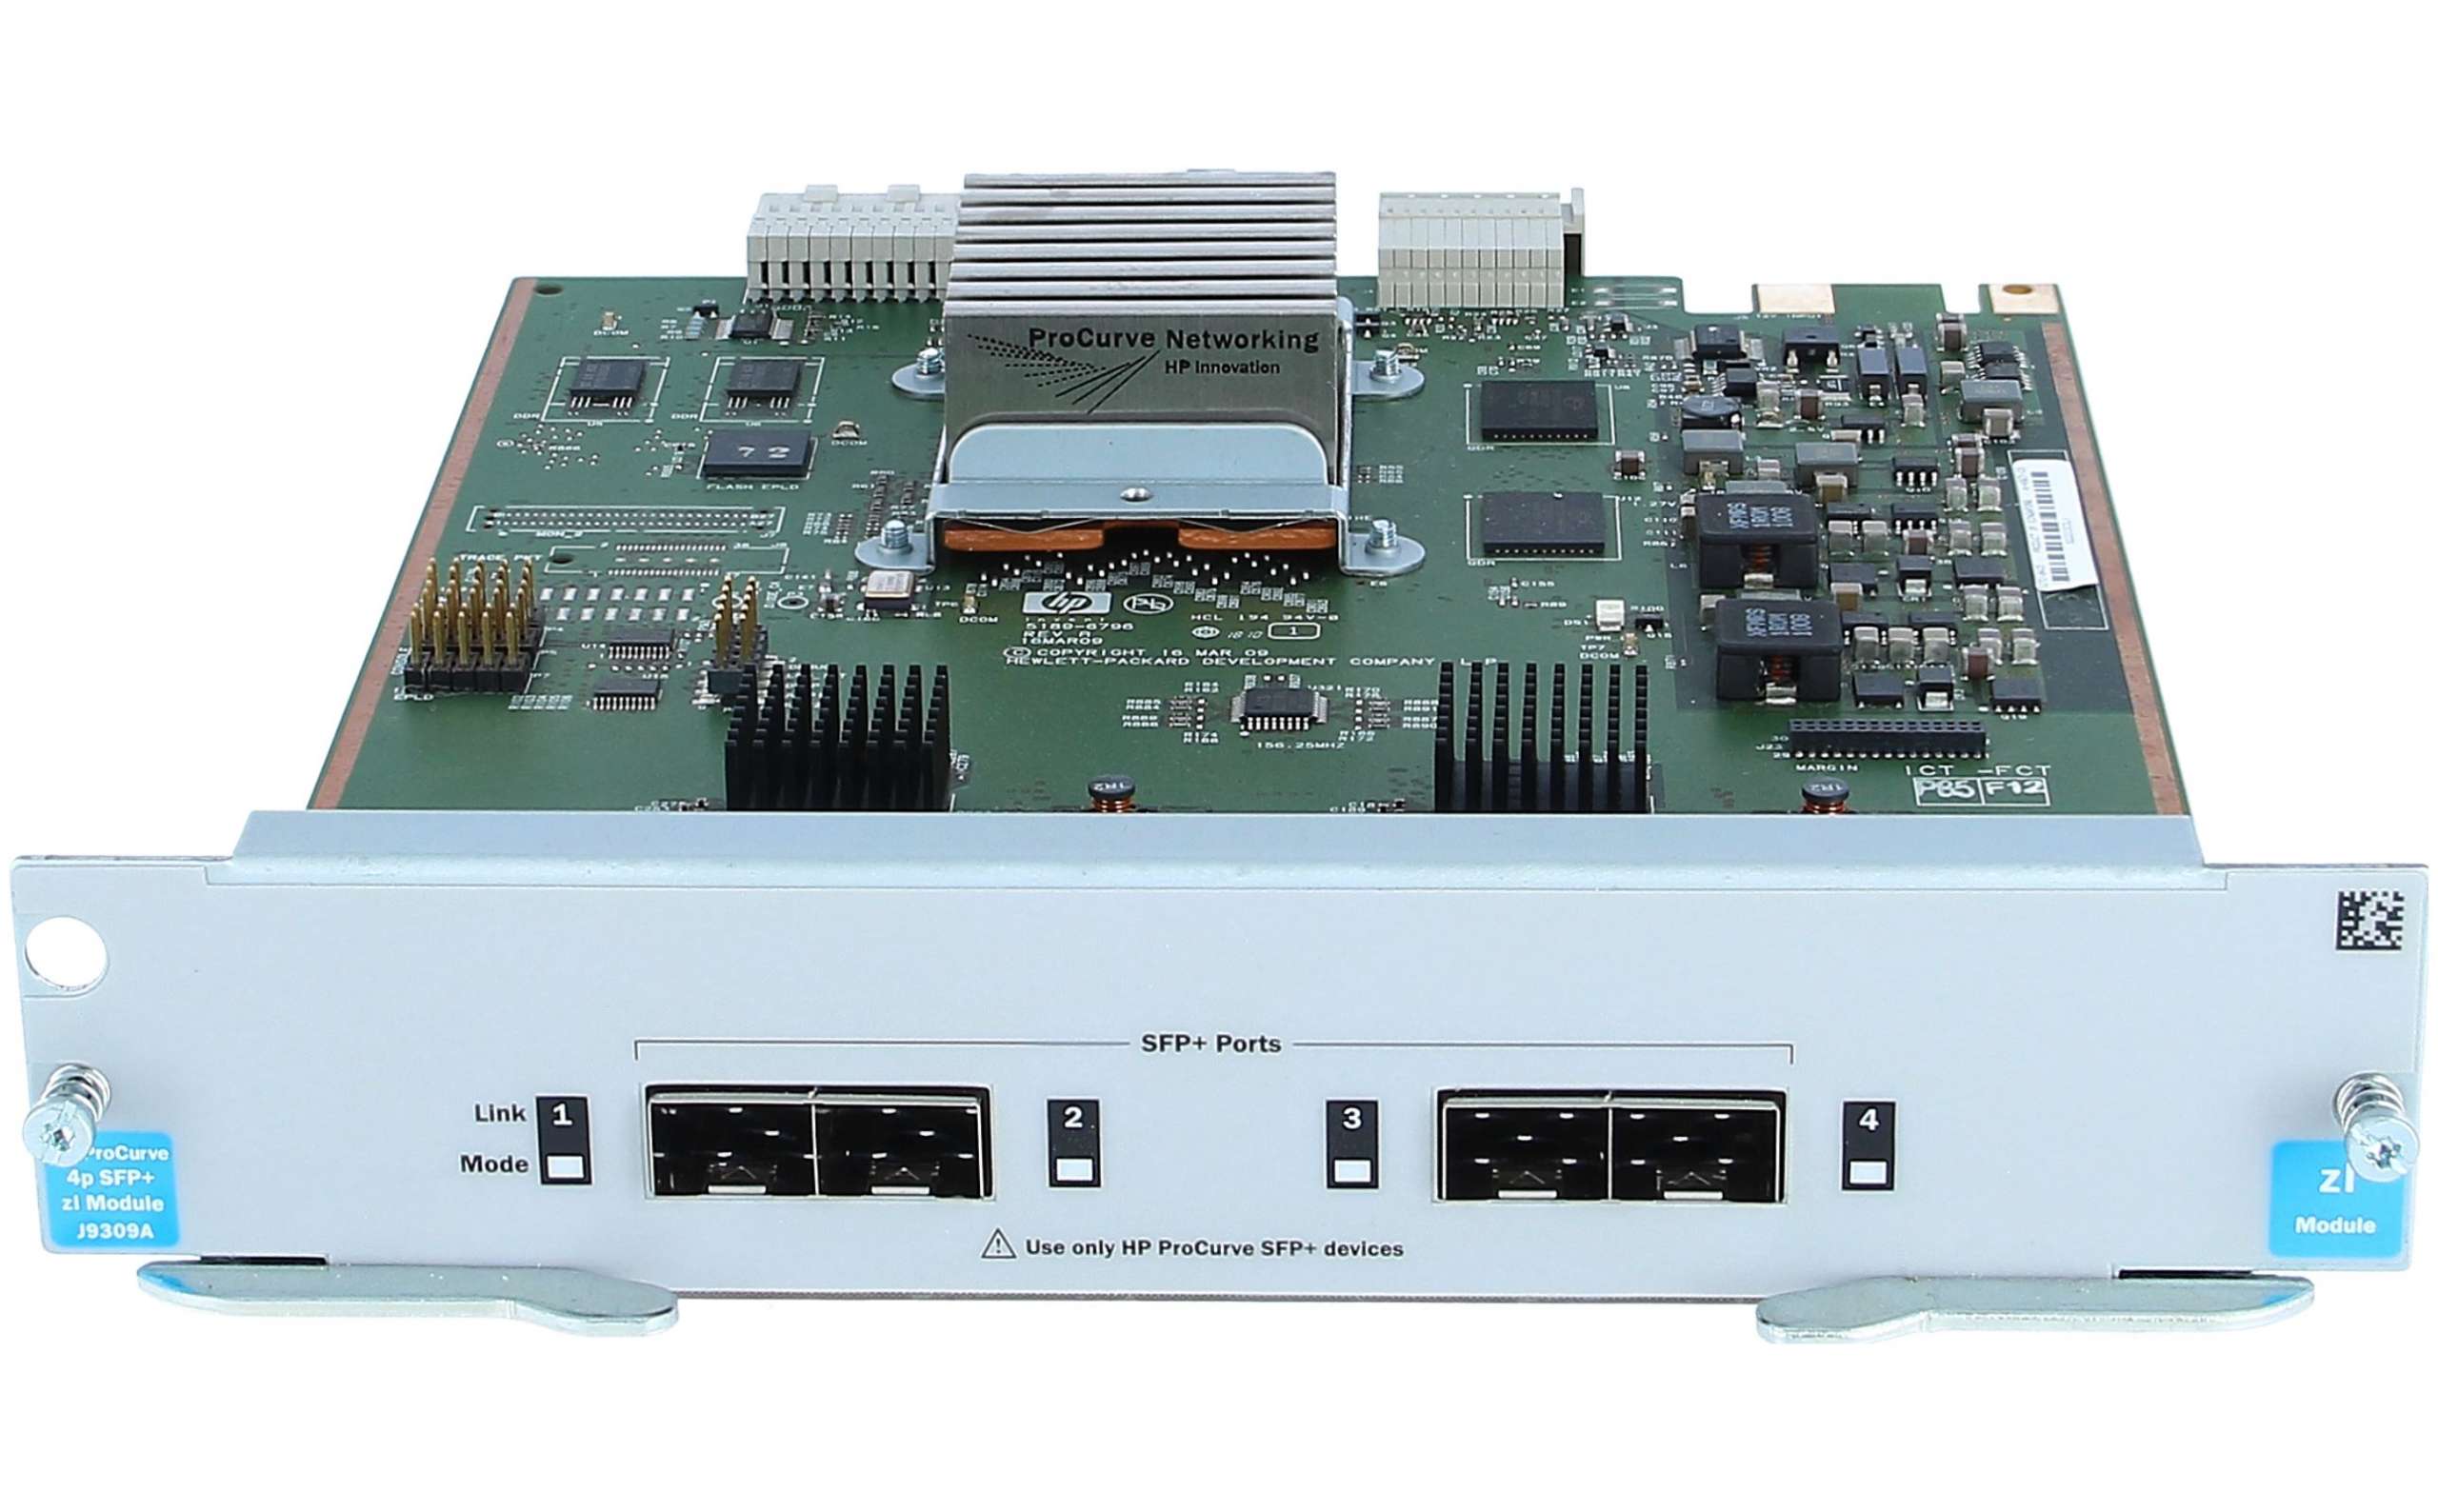 HP - J9309A - HP 4-port 10GbE SFP+ zl Module